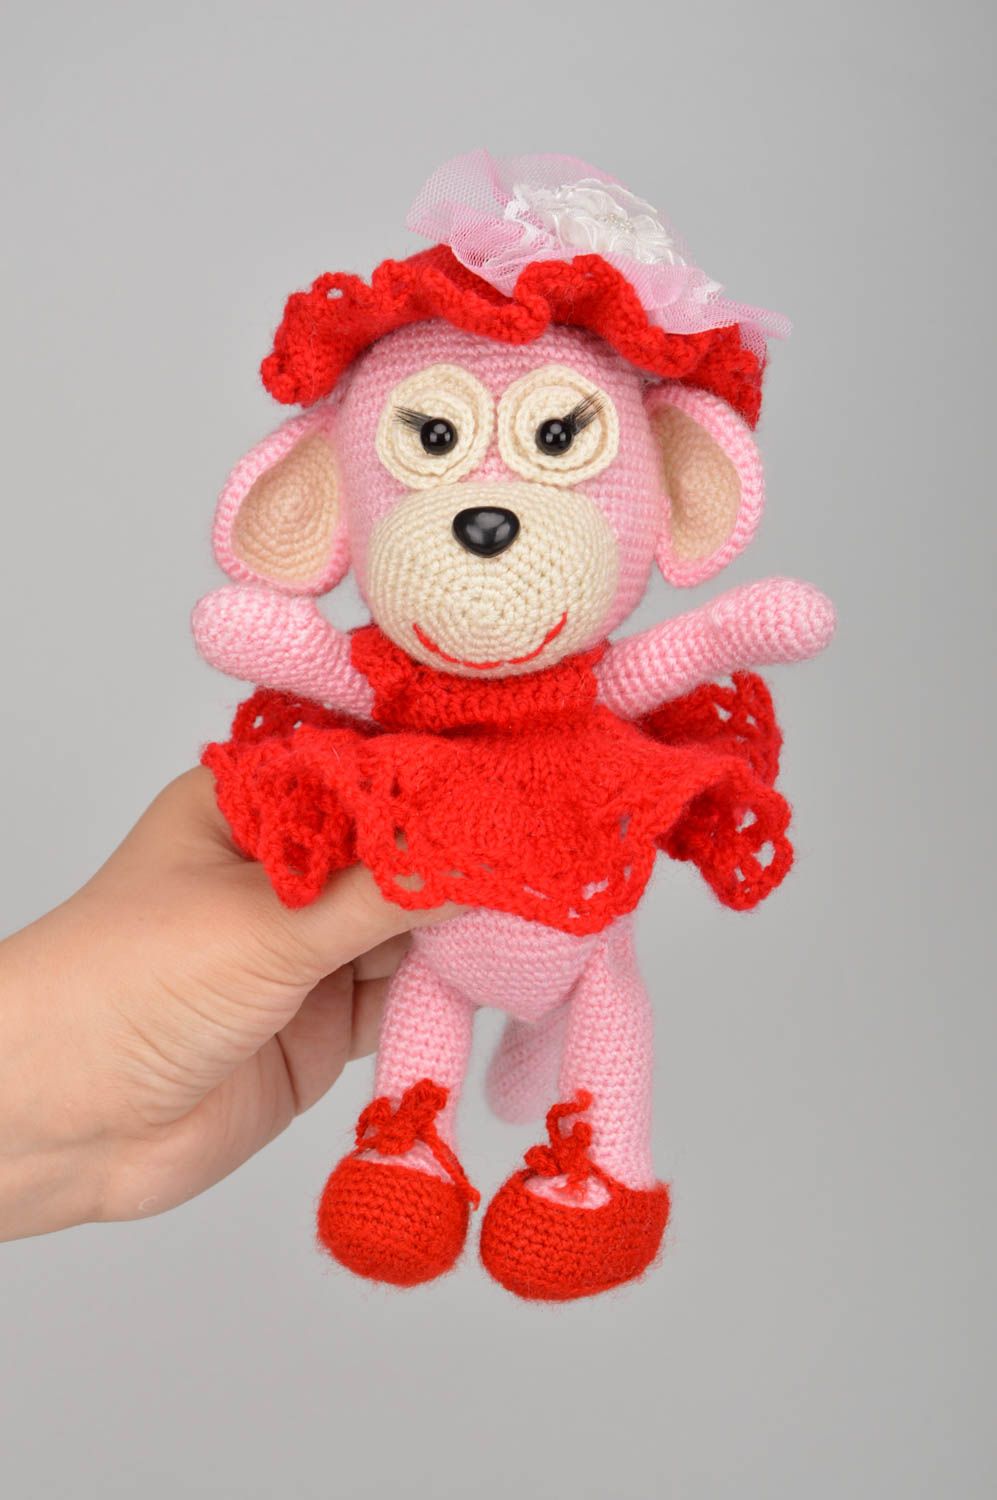 Beautiful homemade crochet toy handmade soft toy for kids nursery design photo 3